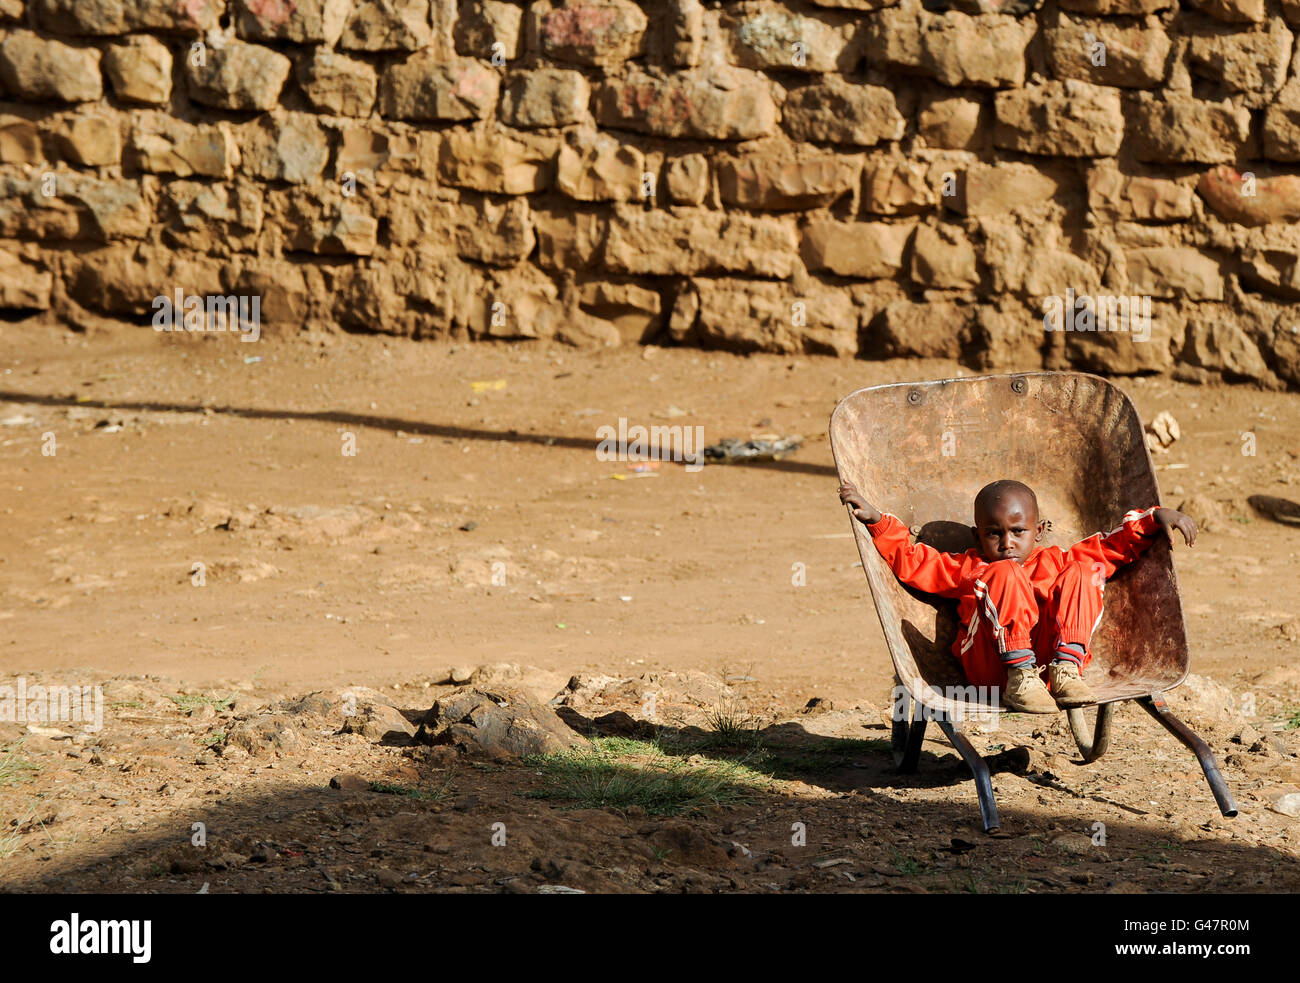 KENYA NAIROBI bidonville Korogocho, garçon assis sans espoir / Kenya Nairobi,genre bidonville Korogocho sitzt hoffnungslos in einer Schubkarre Banque D'Images